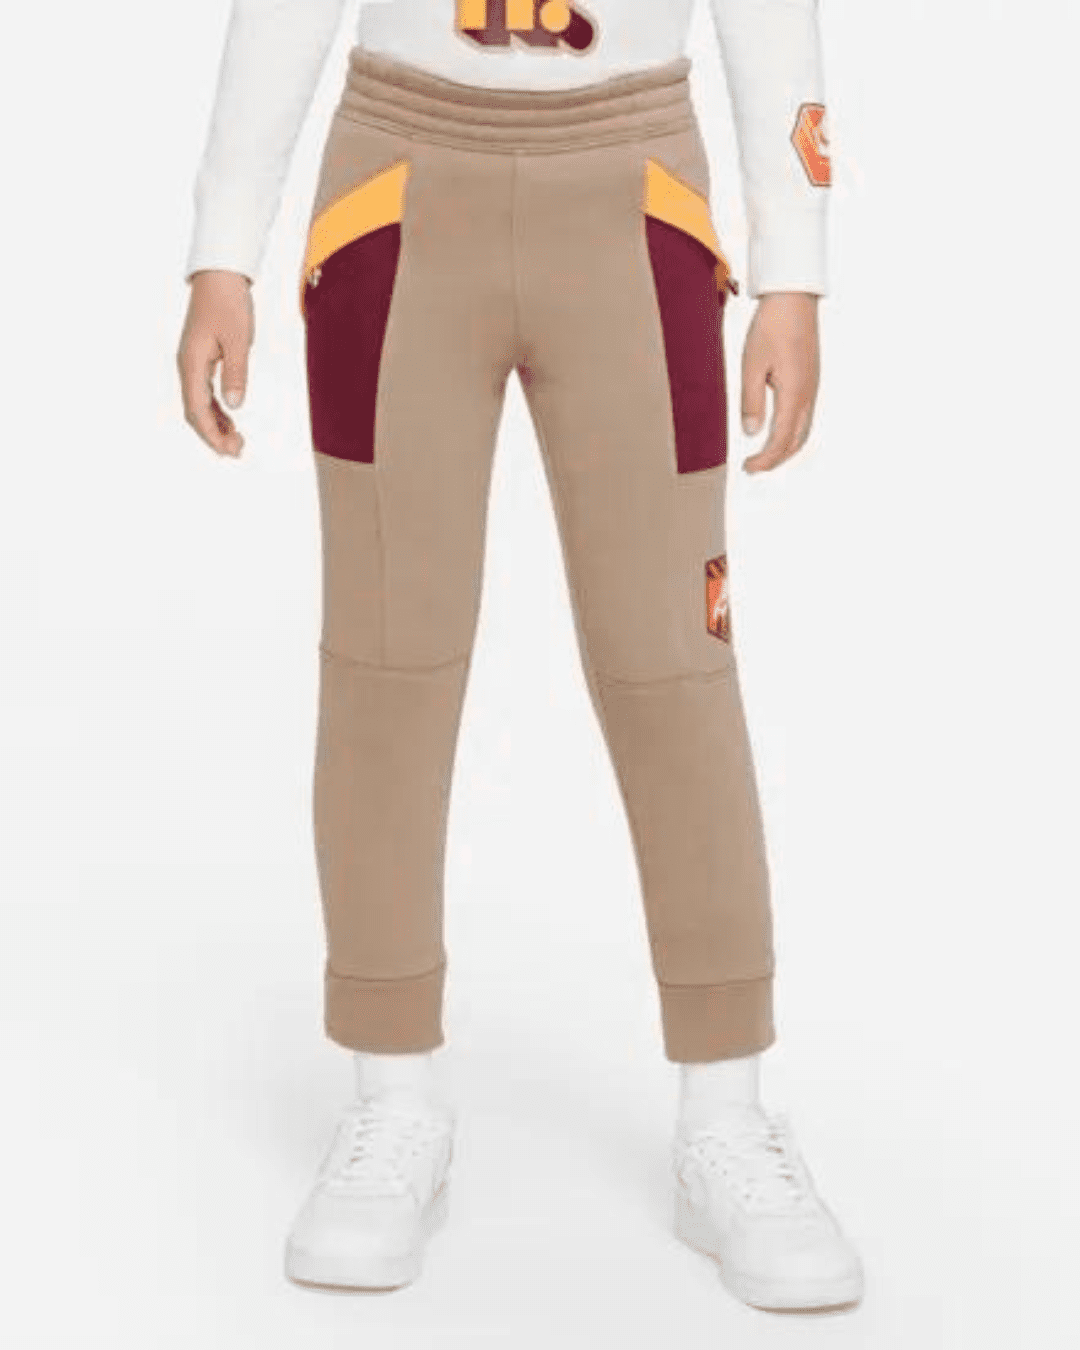 Pantaloni Nike Great Outdoors FLC Bambini - Marrone/Rosso